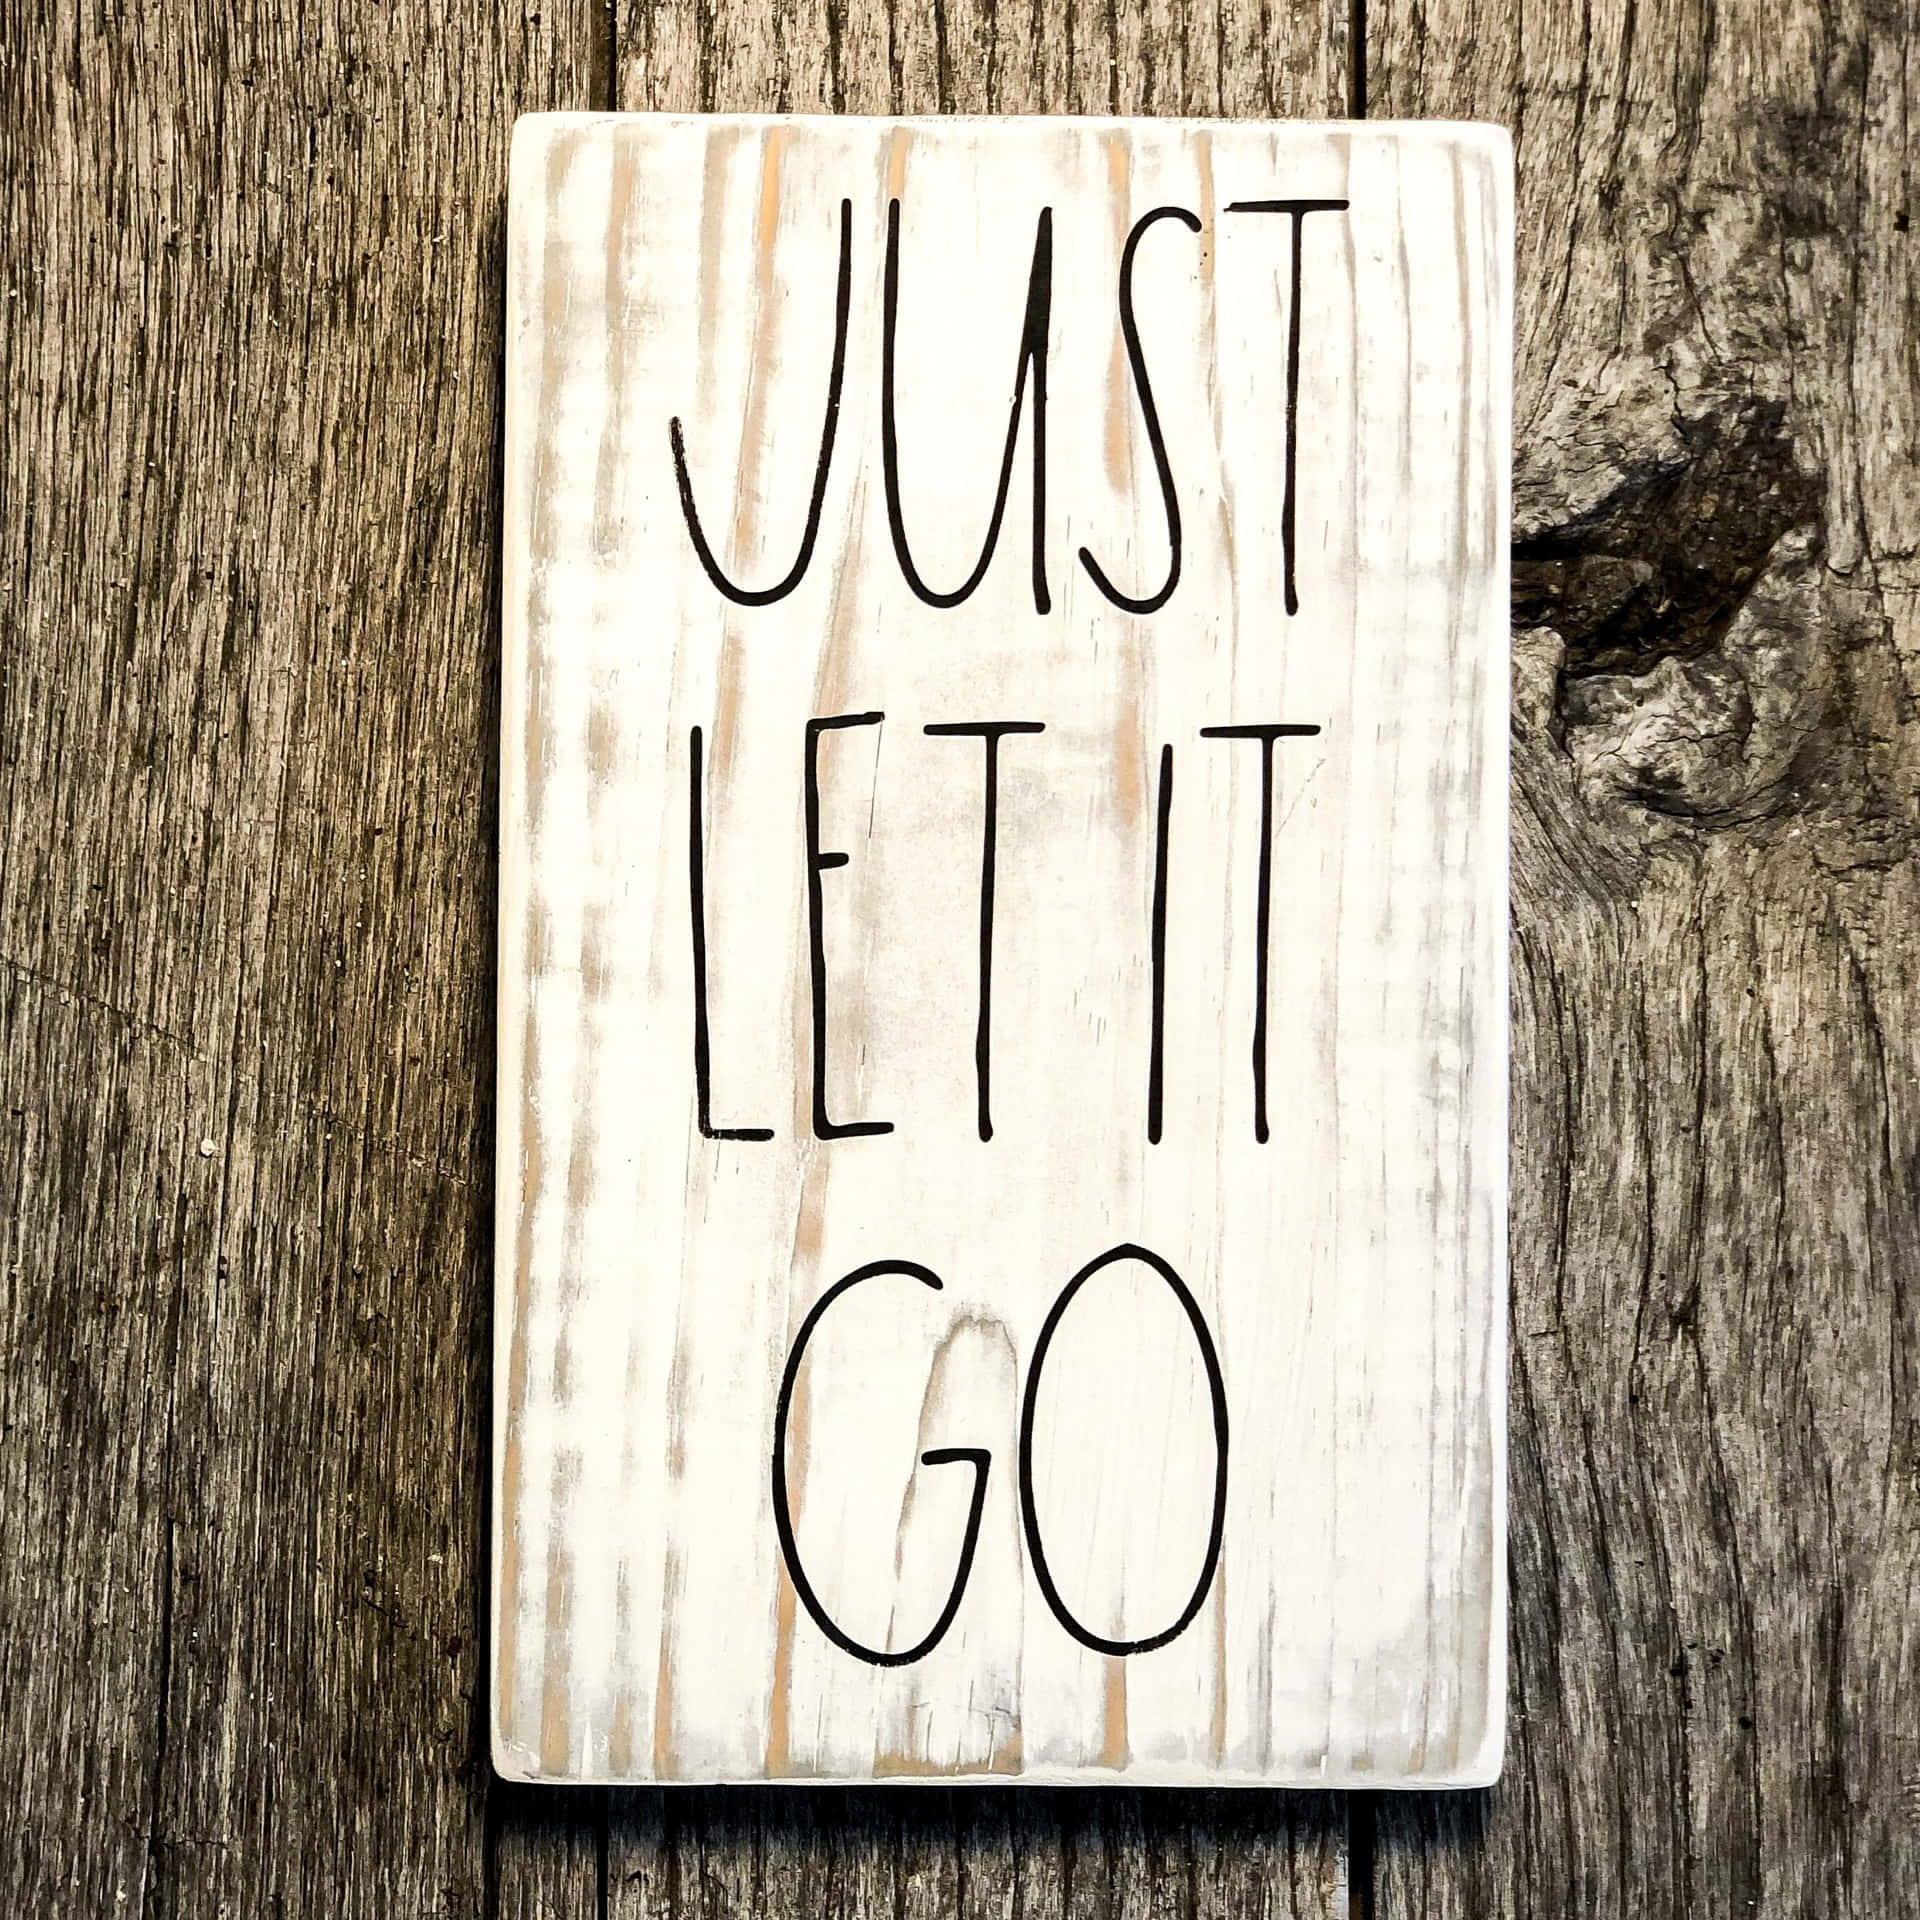 Let It Go Wooden Background